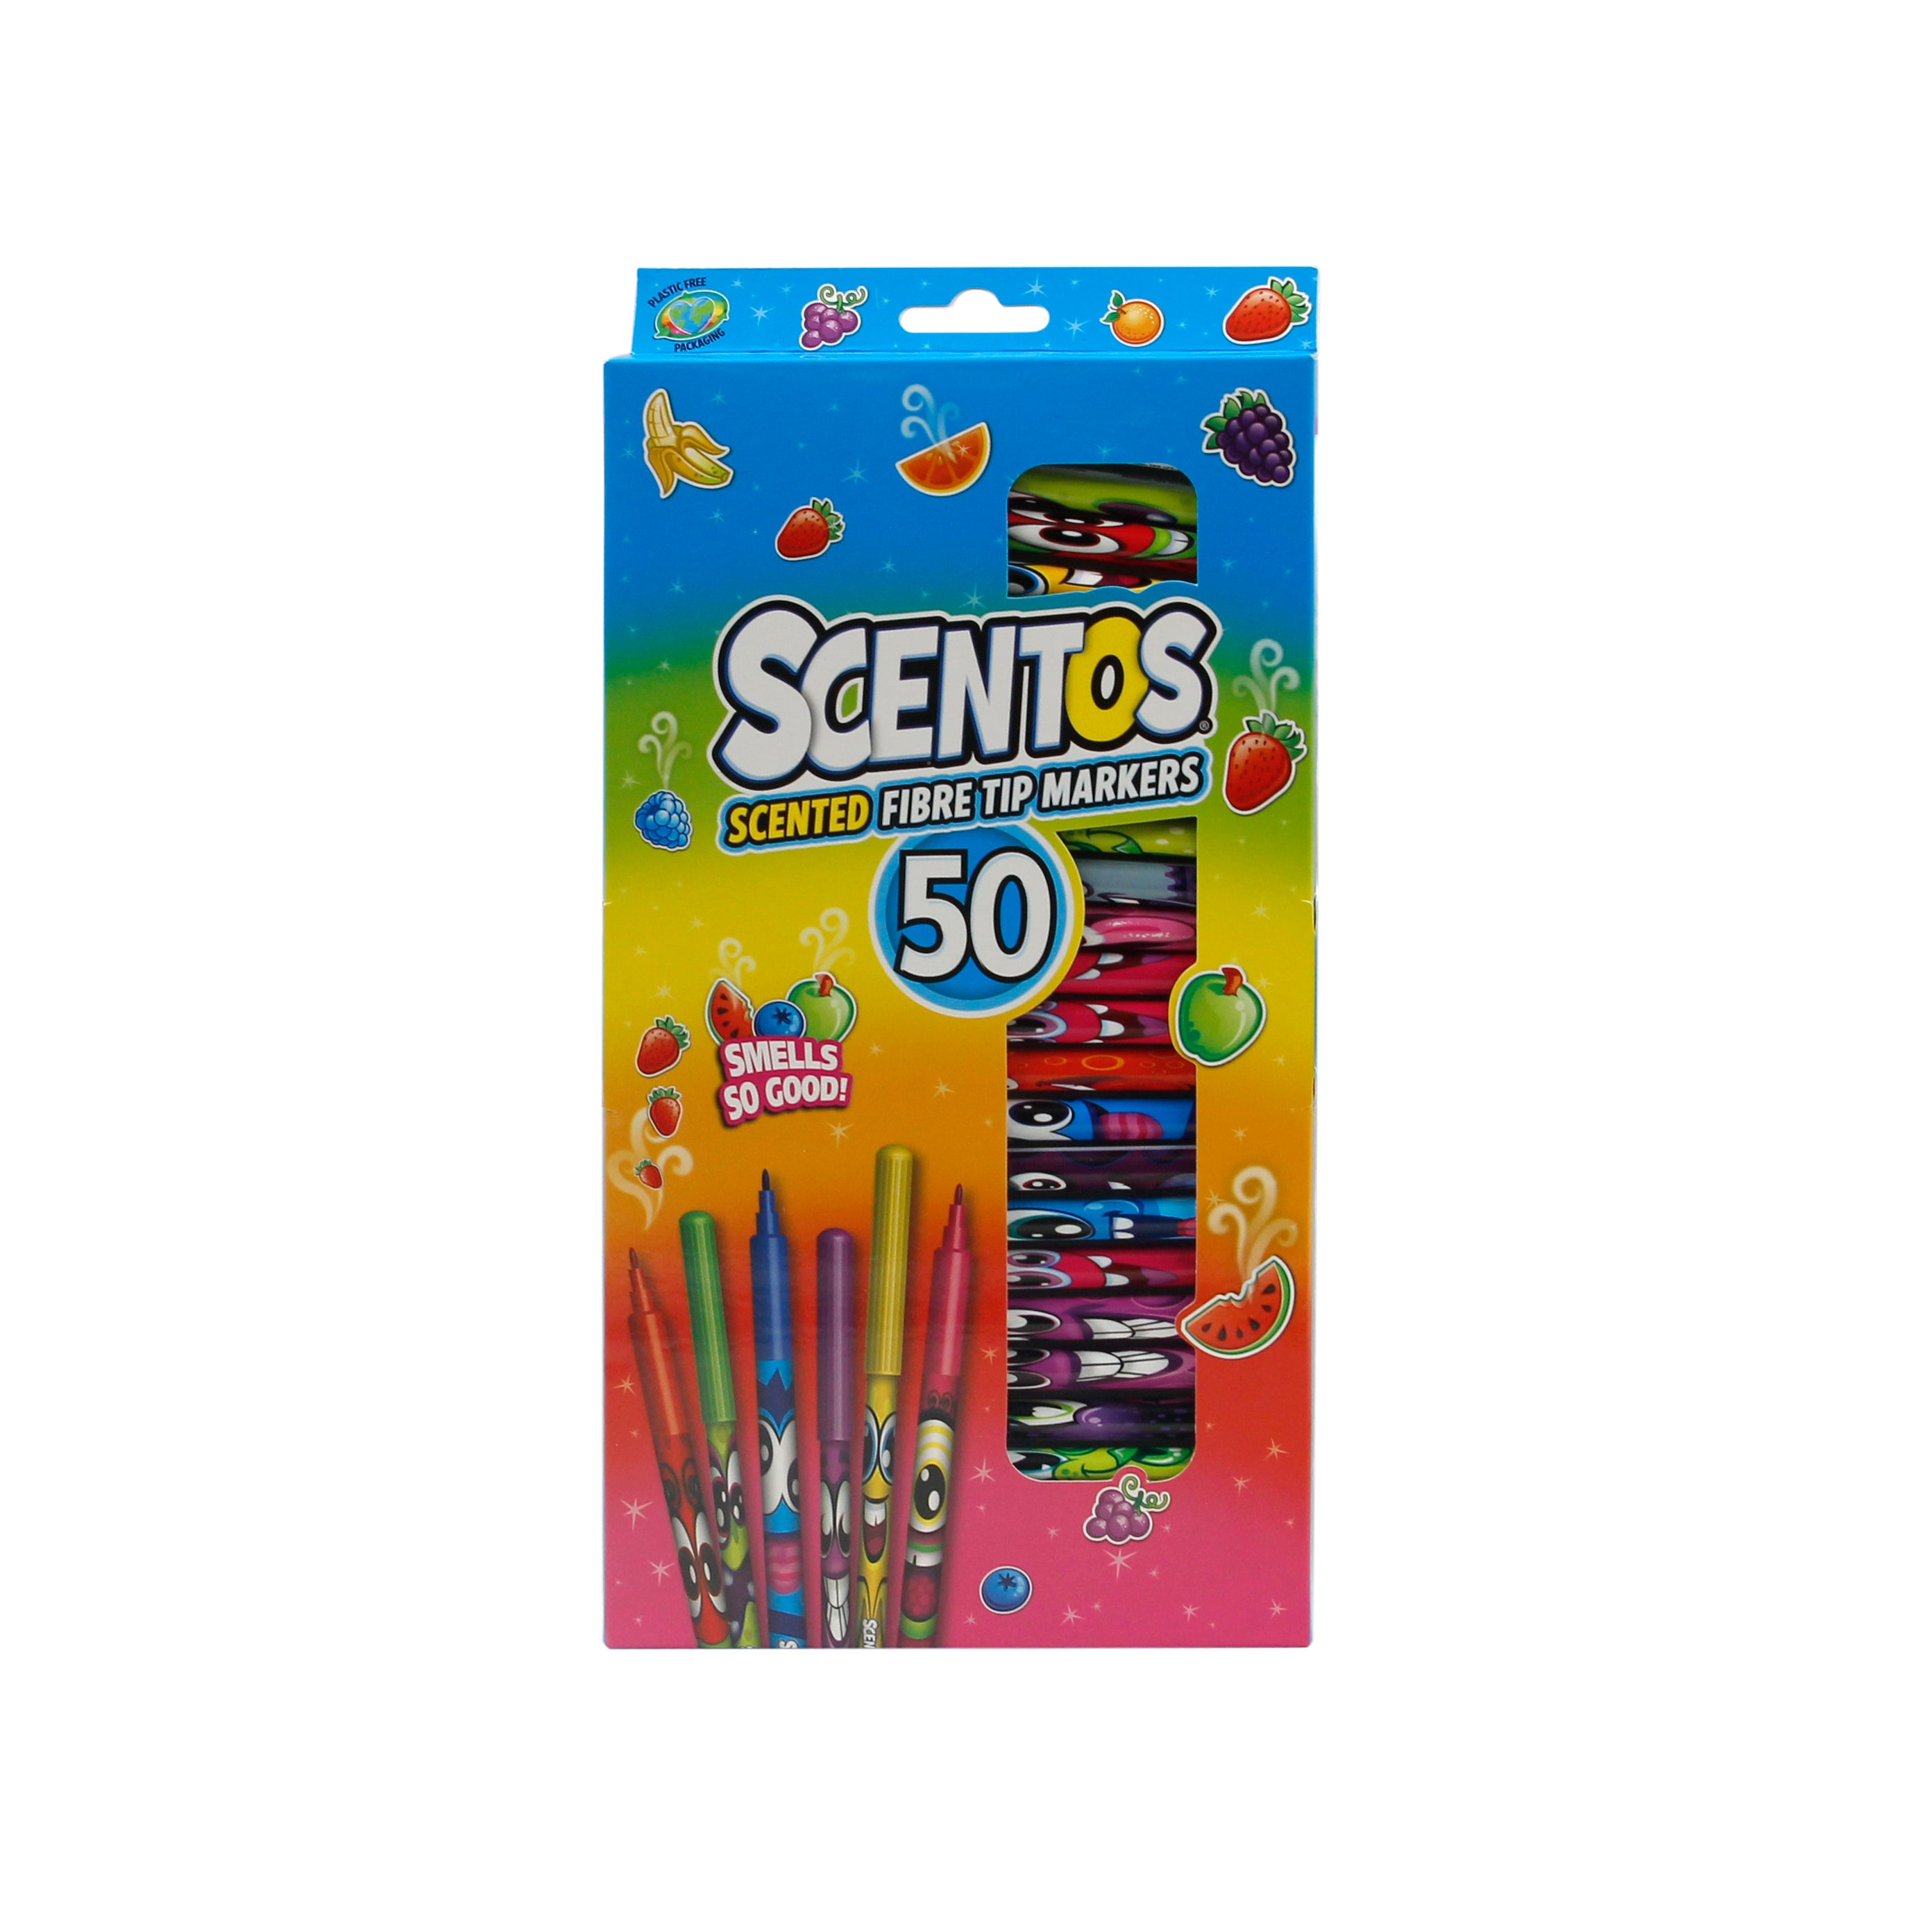 50 Scentos Scented Fibre Tip Pens